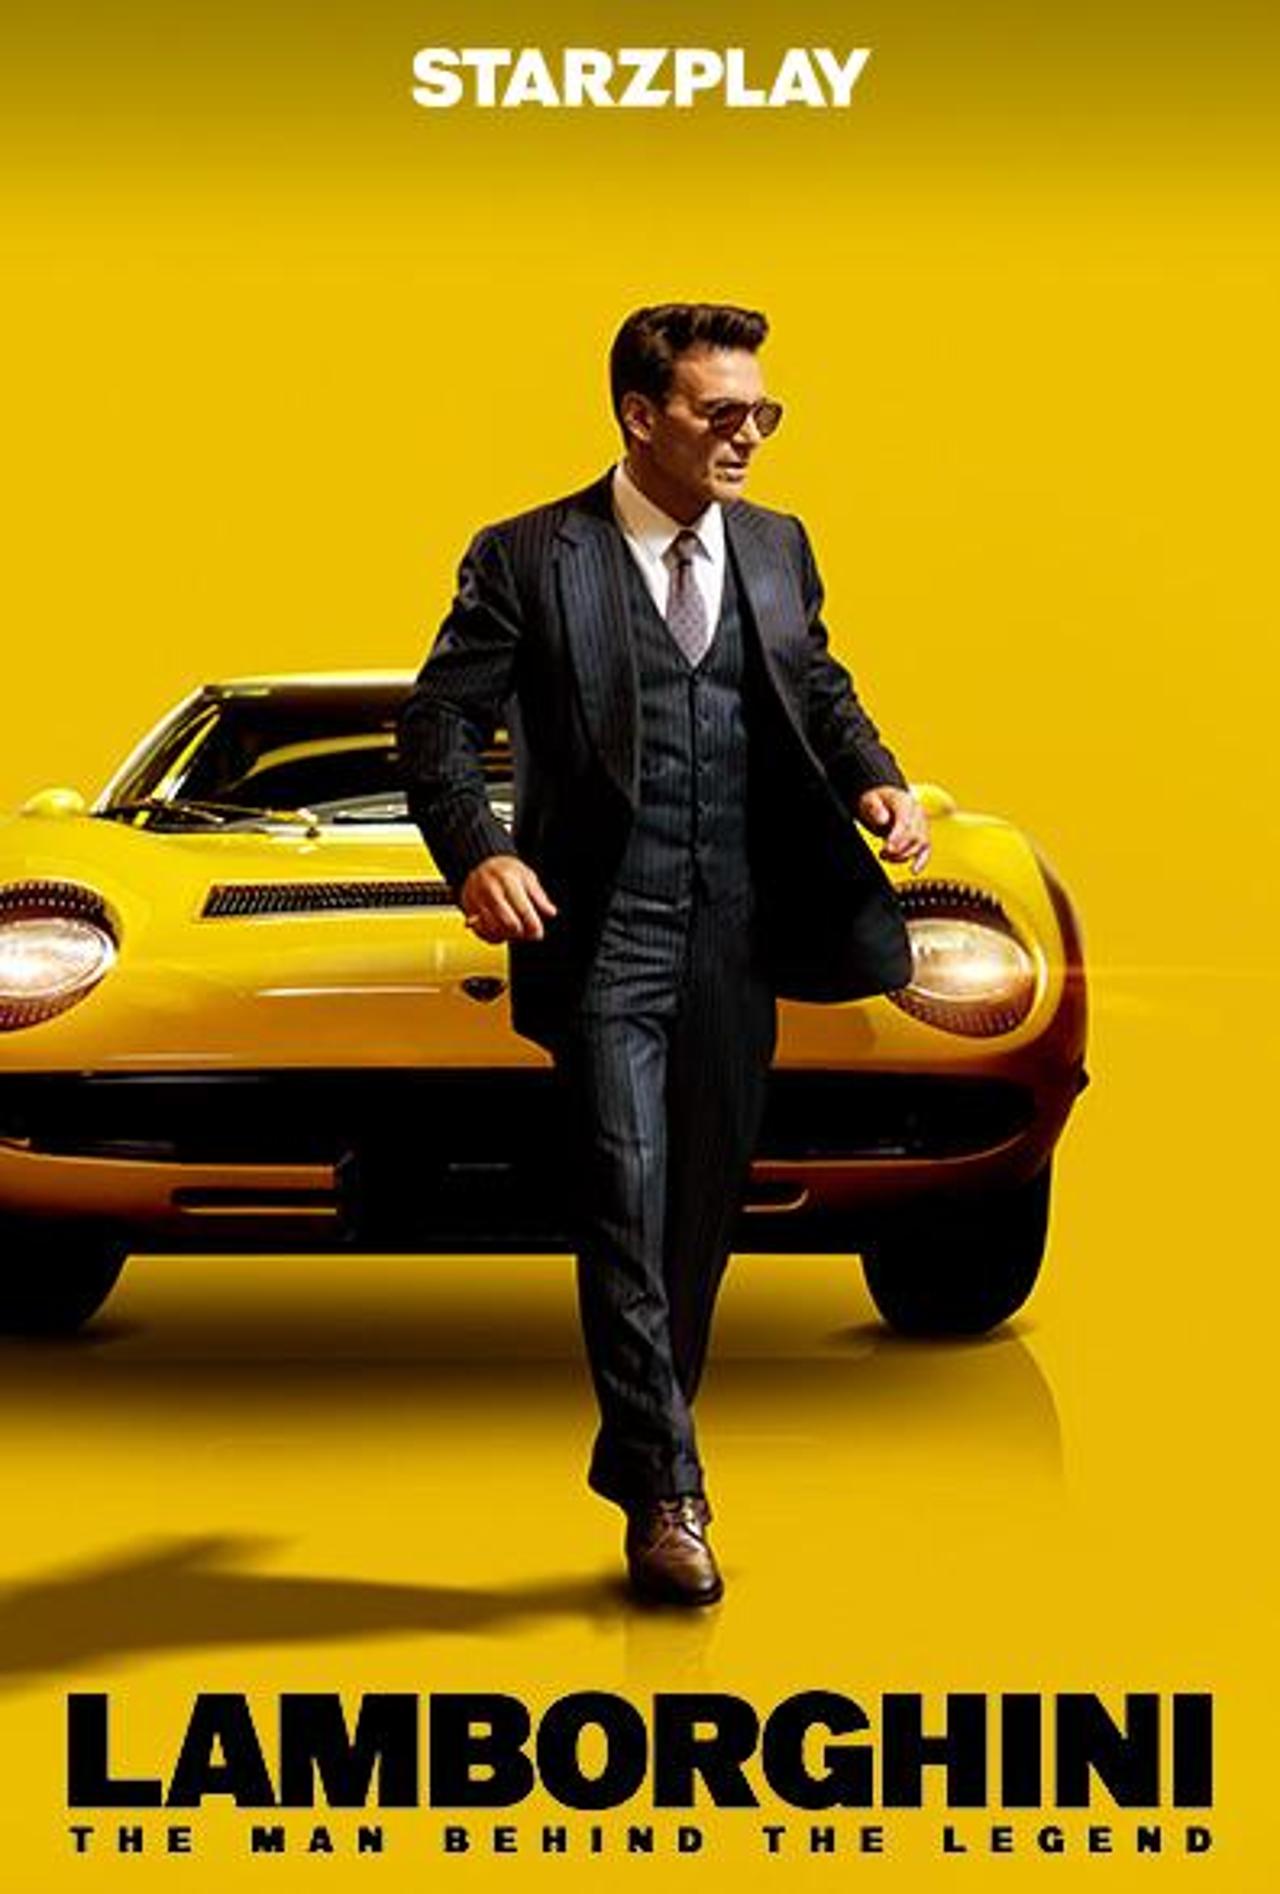 stc tv  Lamborghini: The Man Behind the Legend